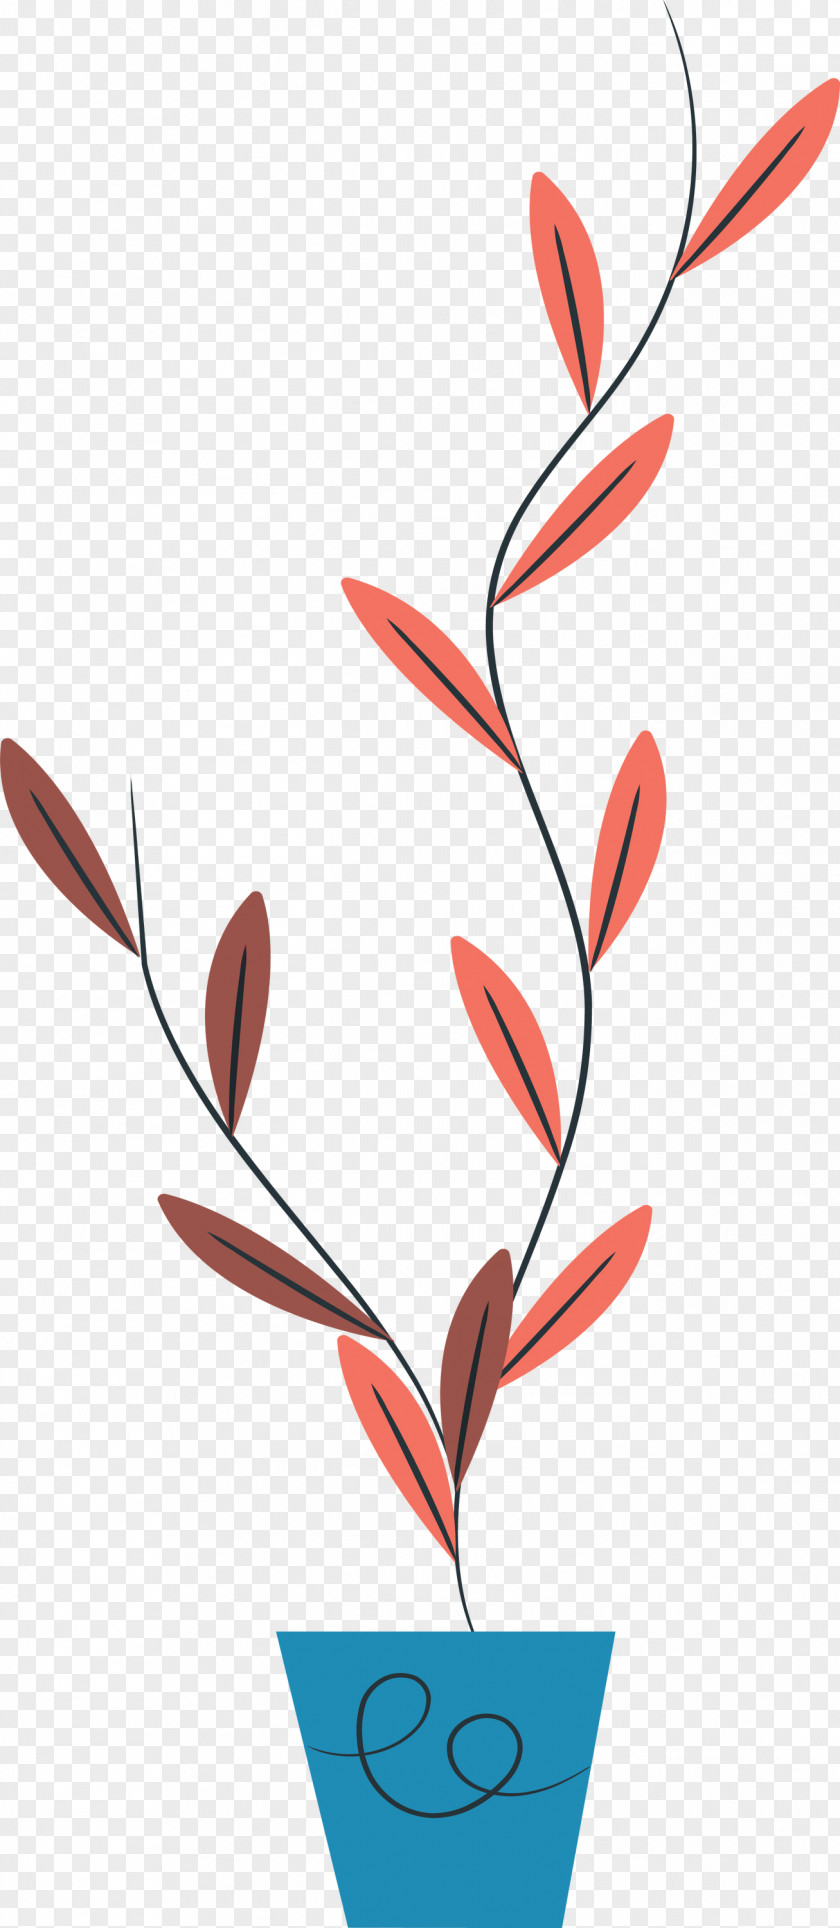 Leaf Plant Stem Watercolor Painting Twig Petal PNG